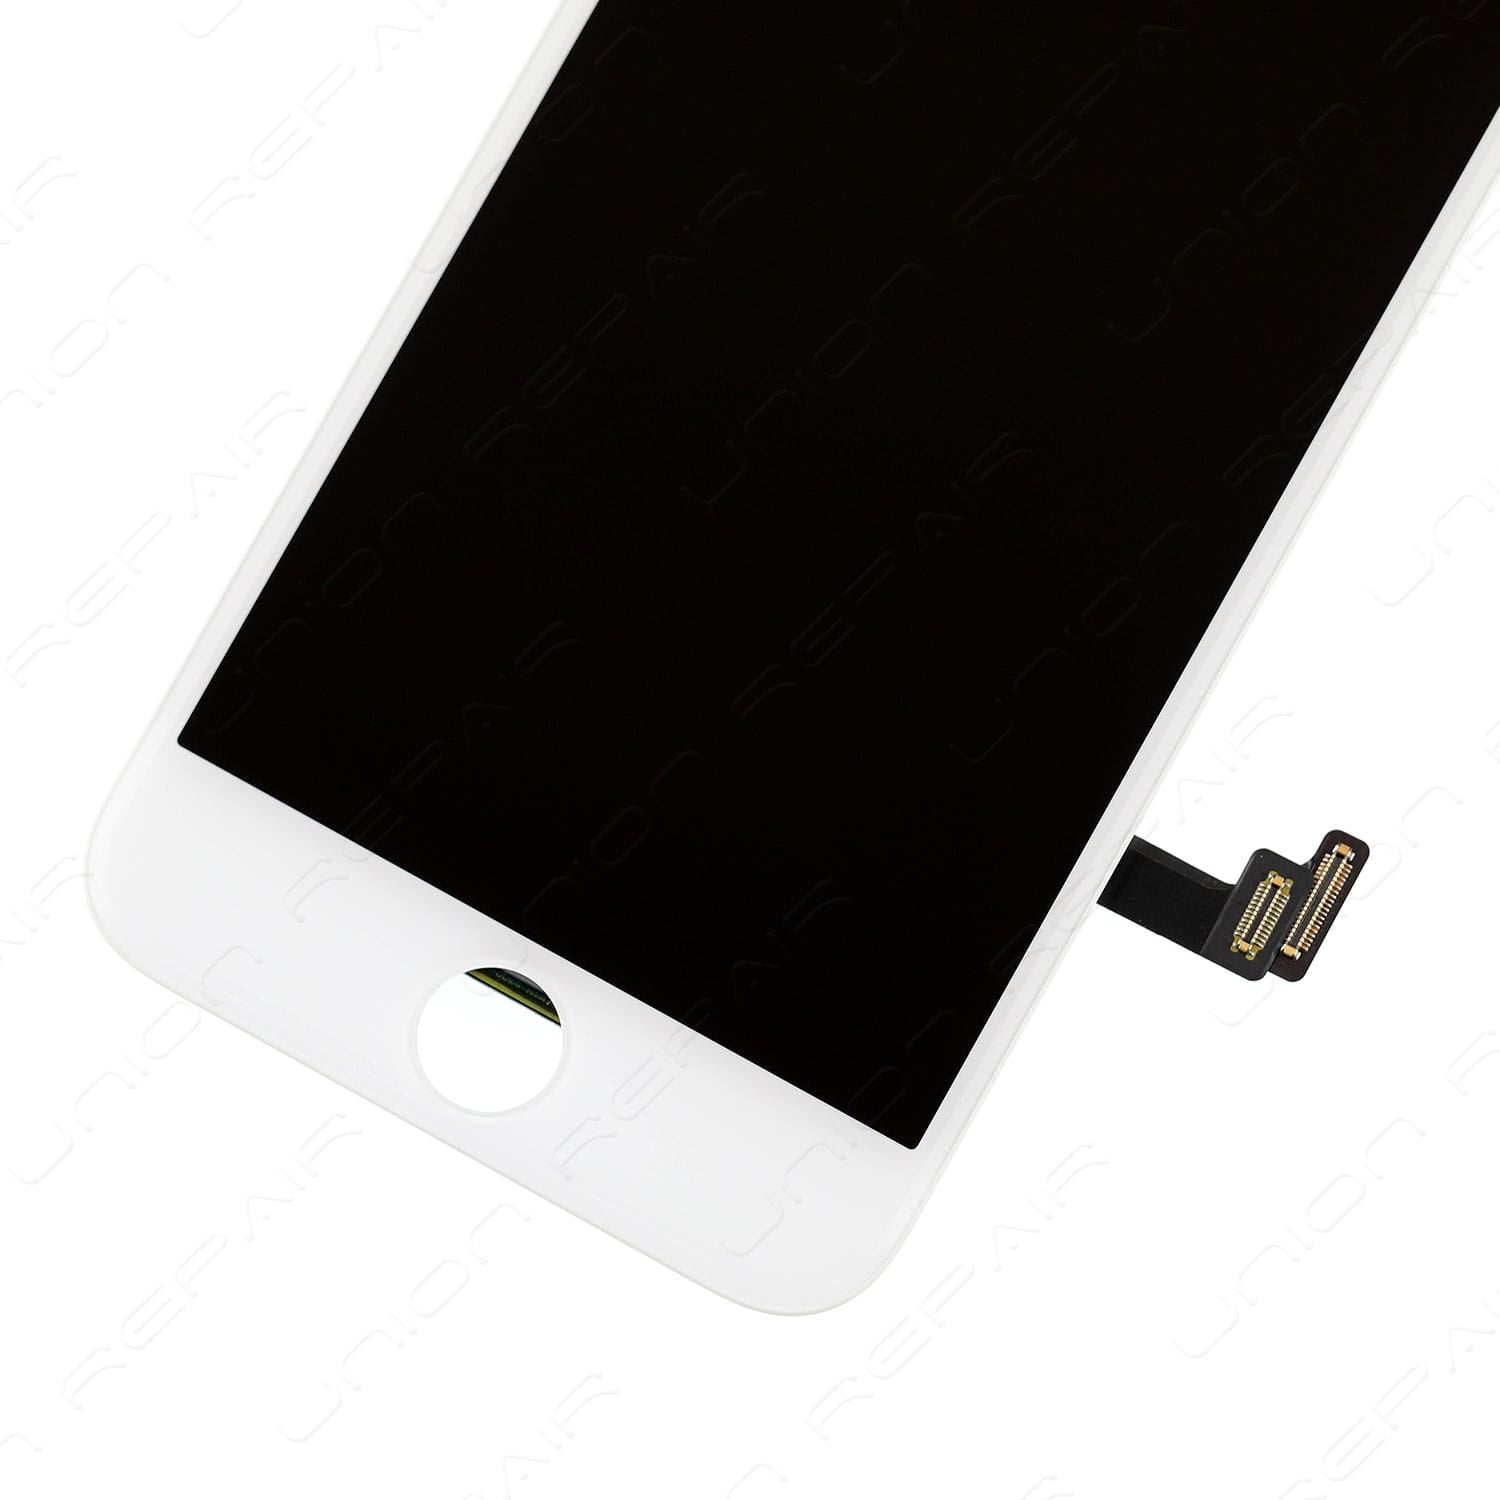 iPhone 8 Plus LCD Screen - White